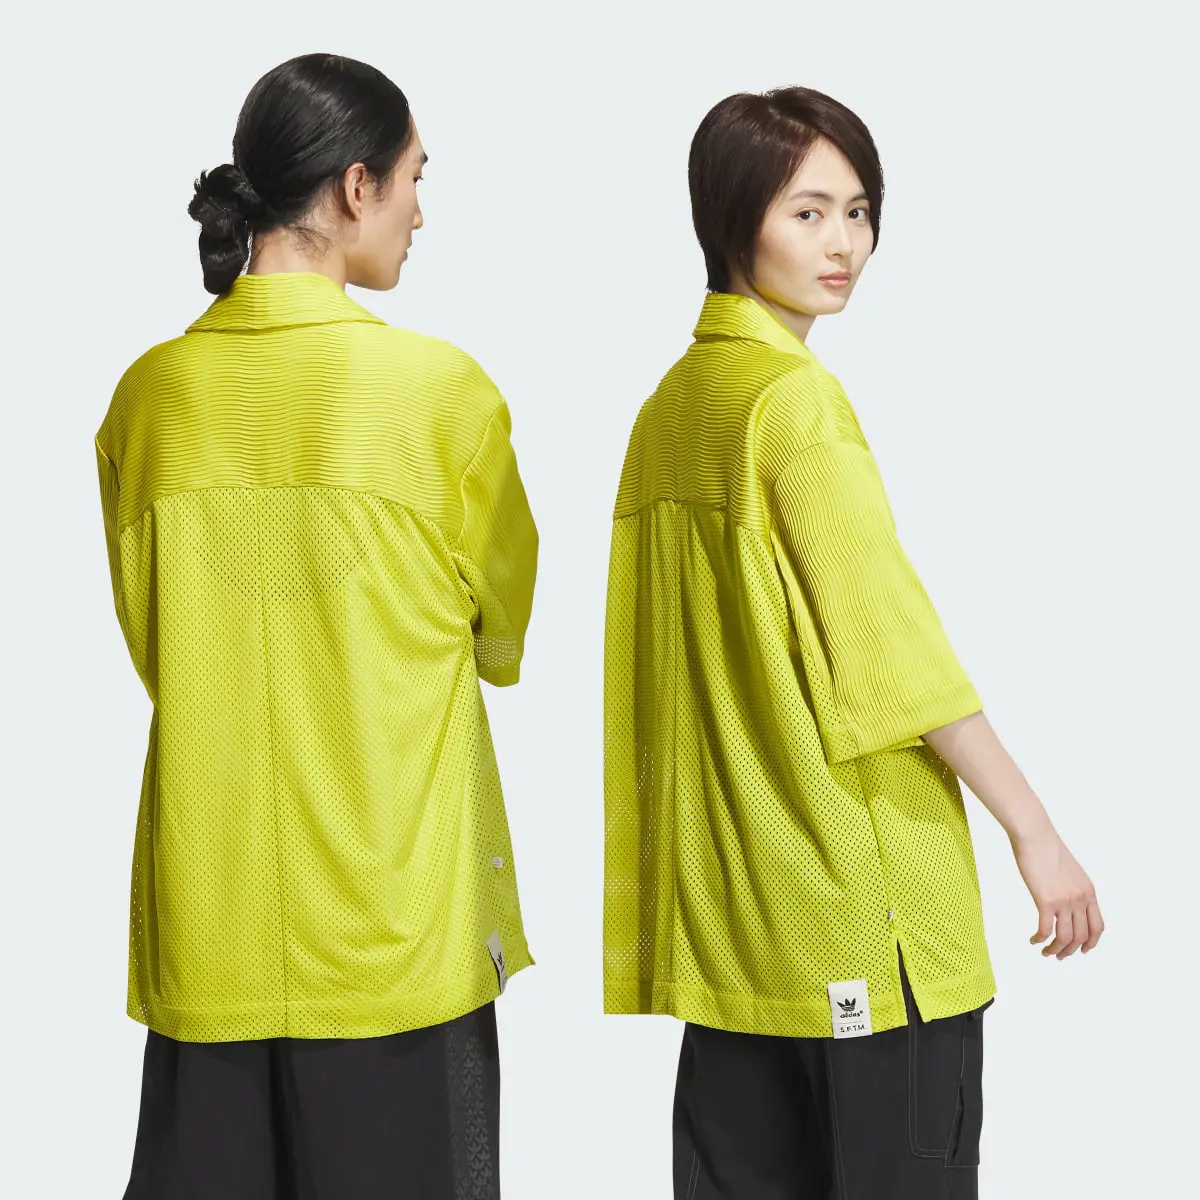 Adidas SFTM Short Sleeve Shirt (Gender Neutral). 2